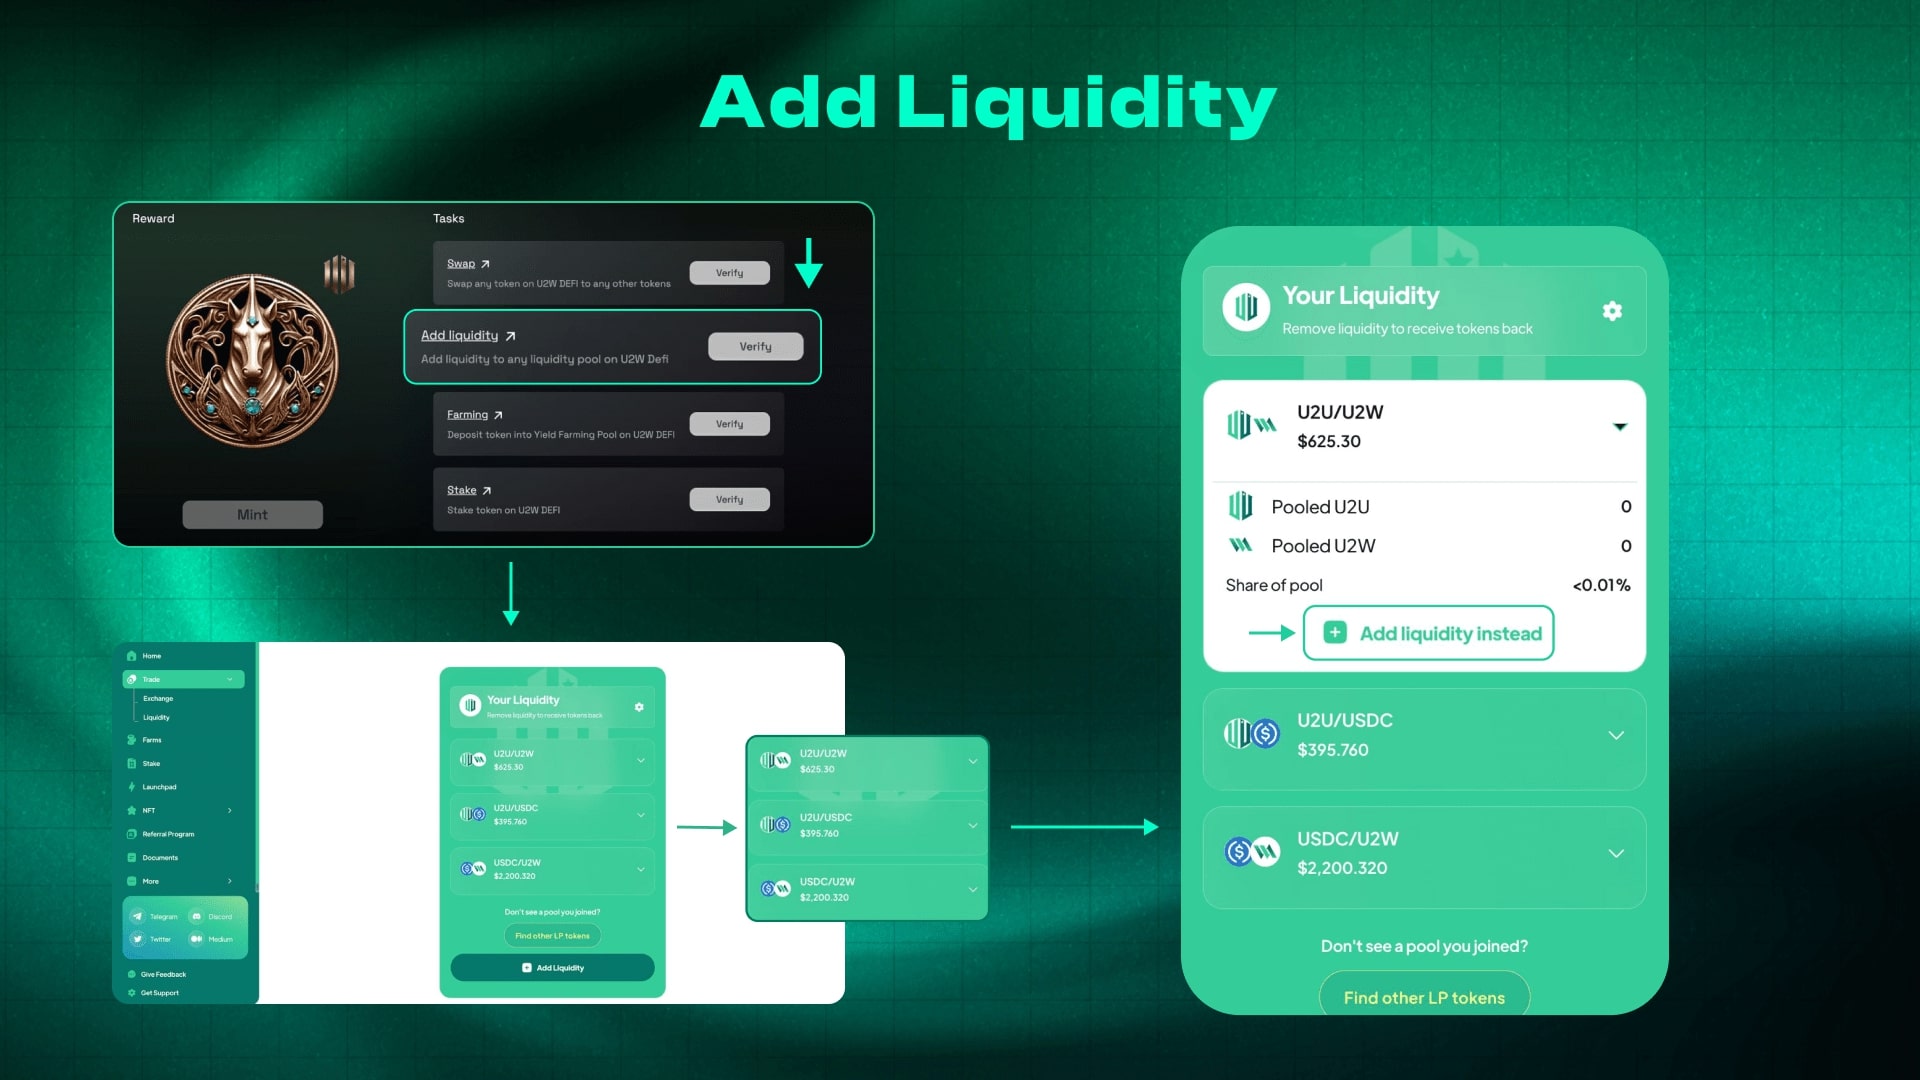 Add liquidity to any liquidity pool